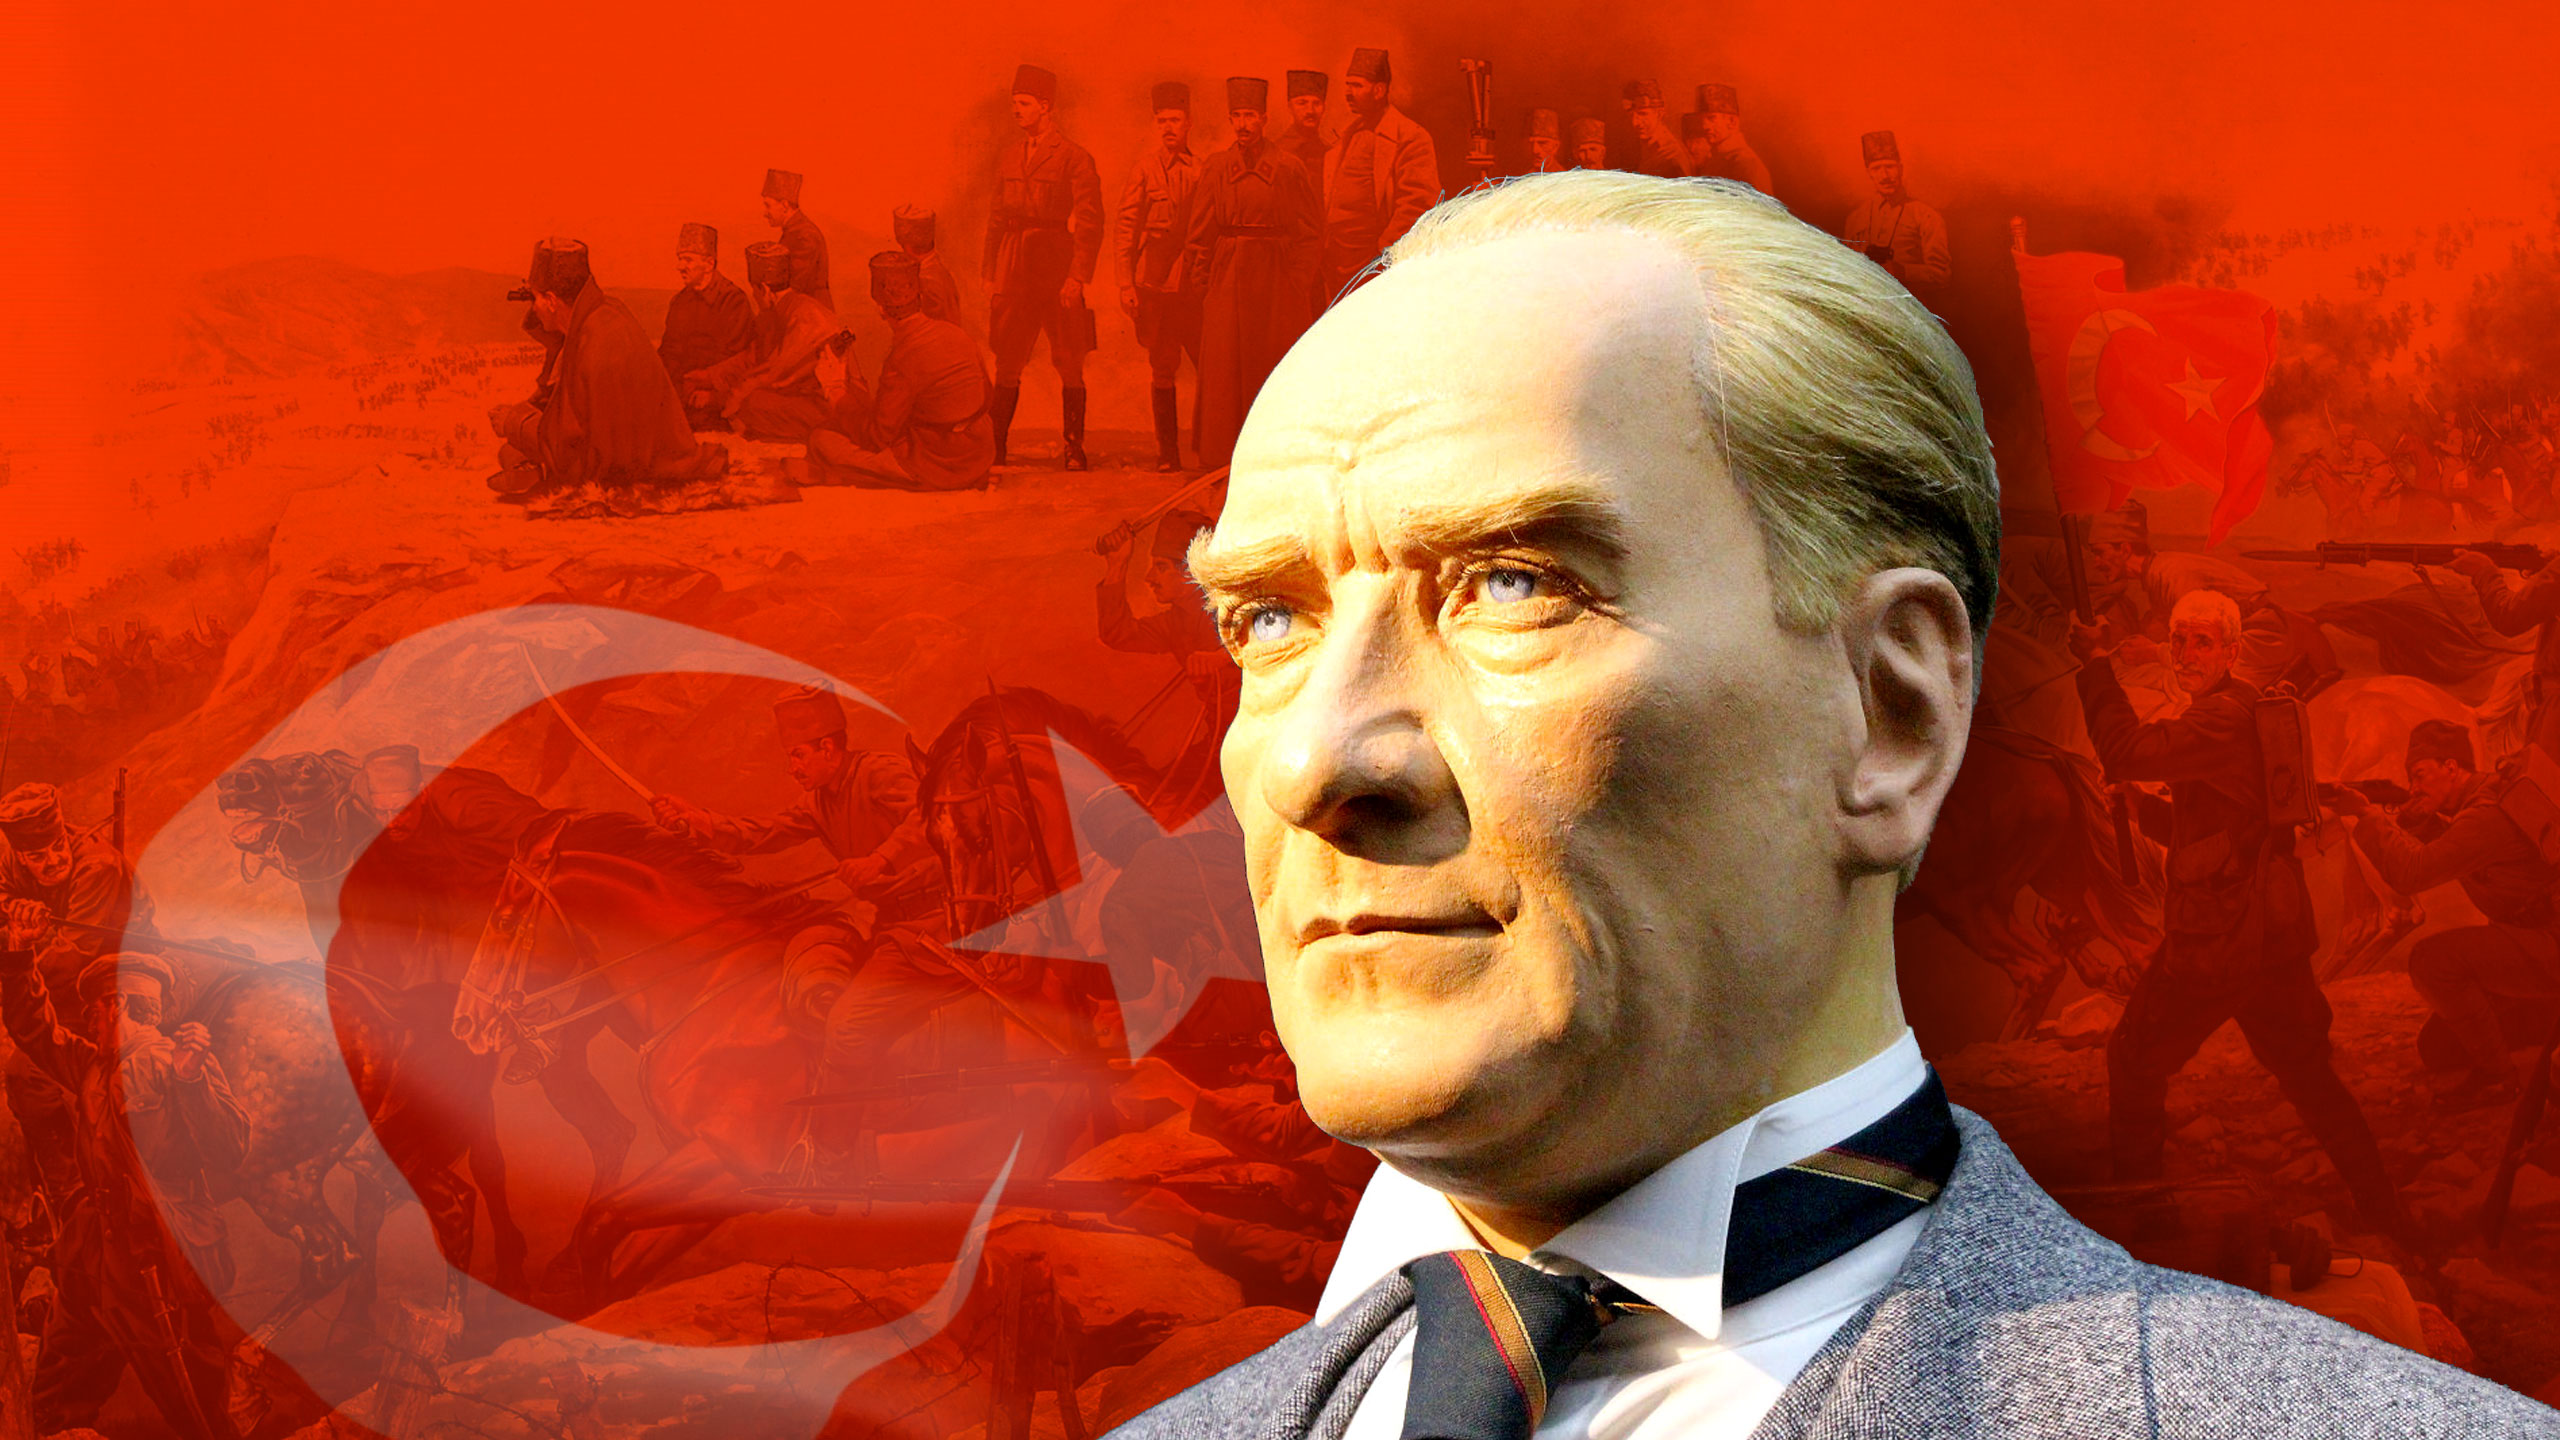 Ulu Onder Gazi Mustafa Kemal Ataturk Poster by caginoz on DeviantArt